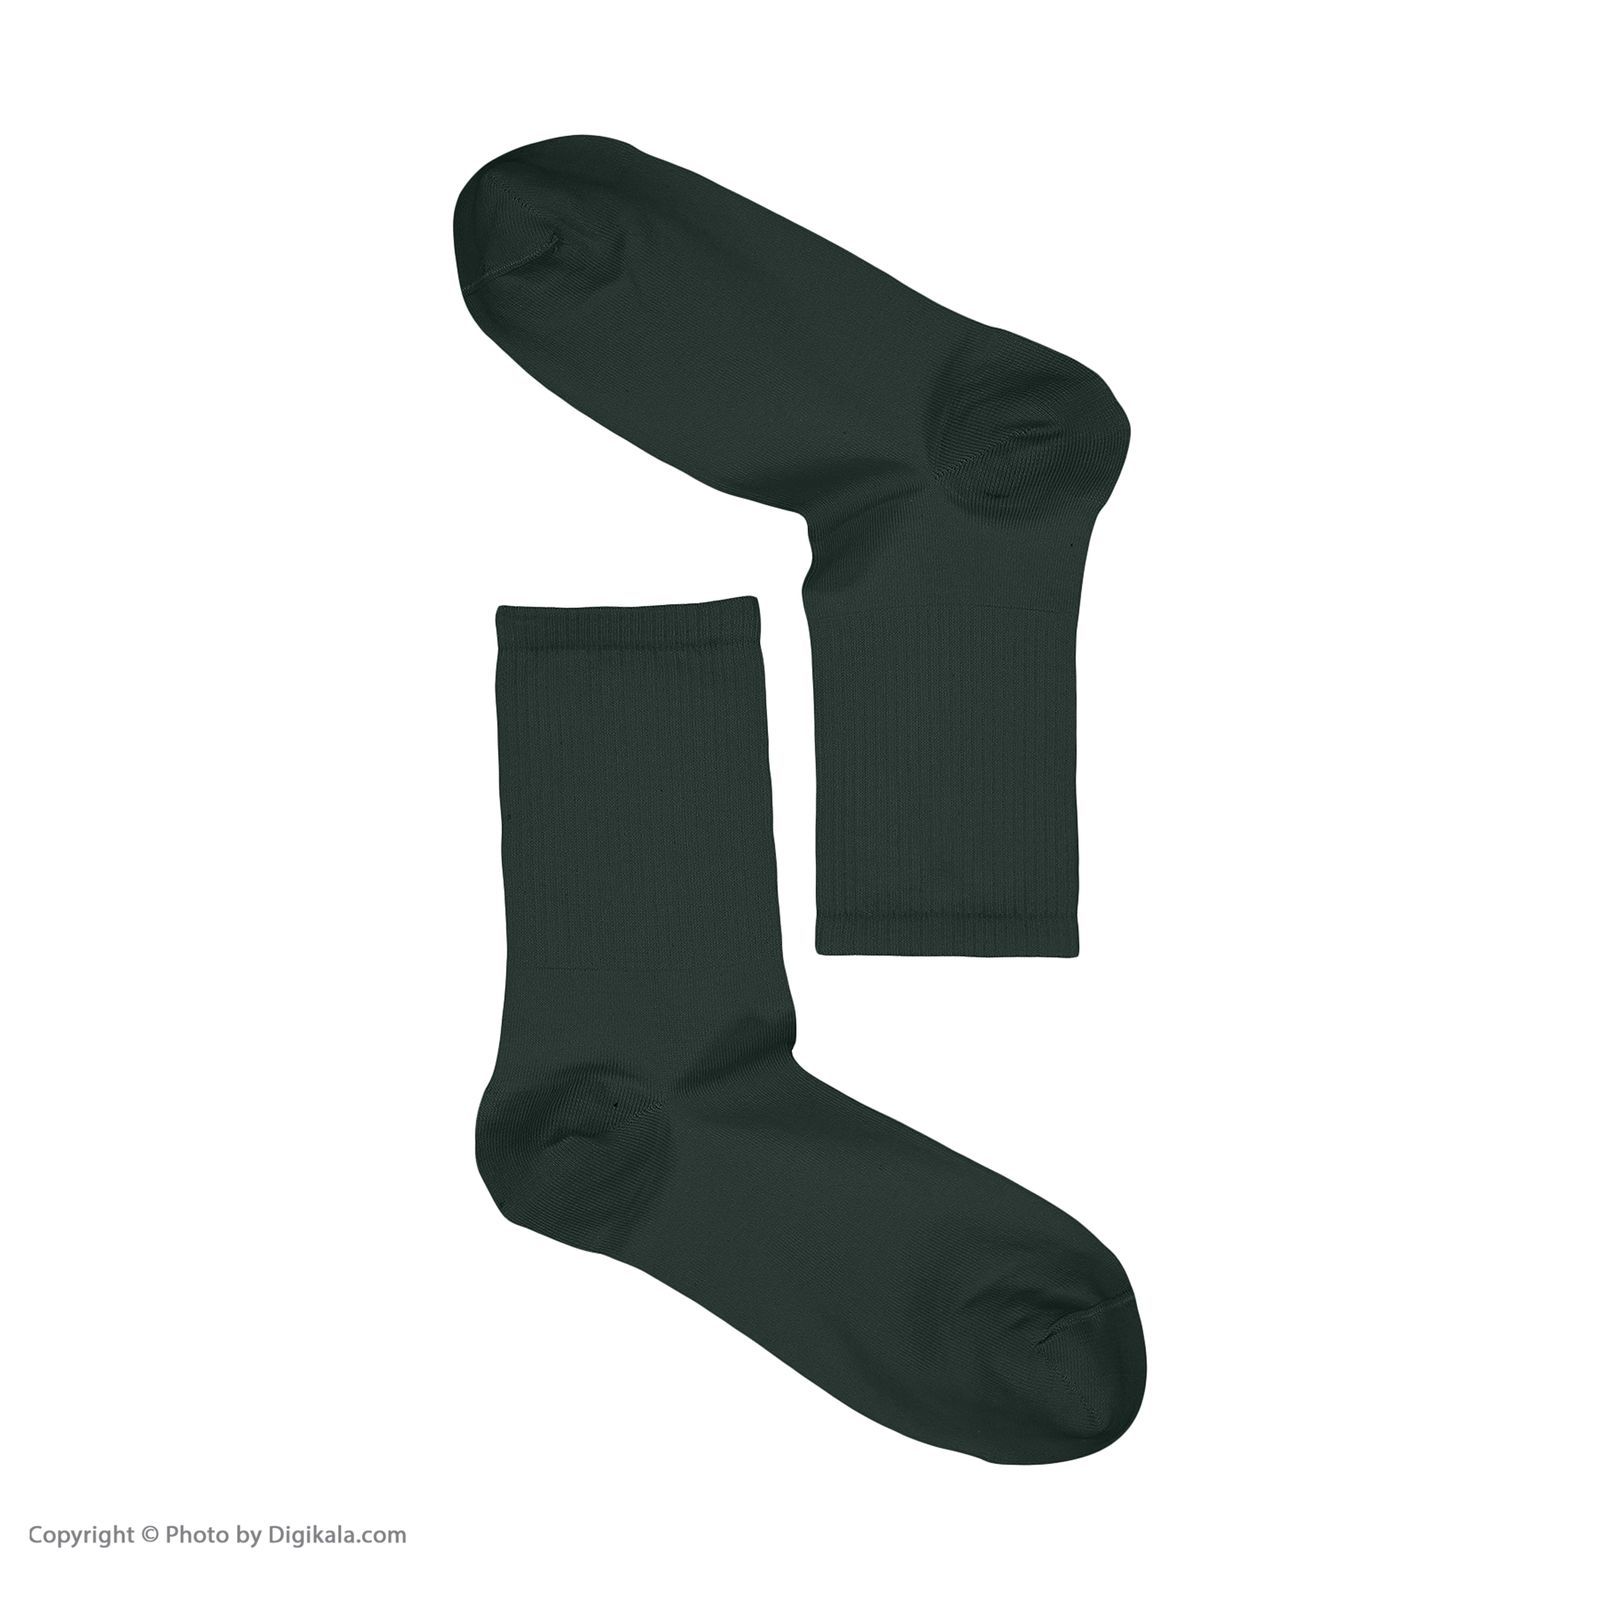 جوراب مردانه سیکس زیرو ناین مدل 1107-47 بسته 3 عددی -  - 3